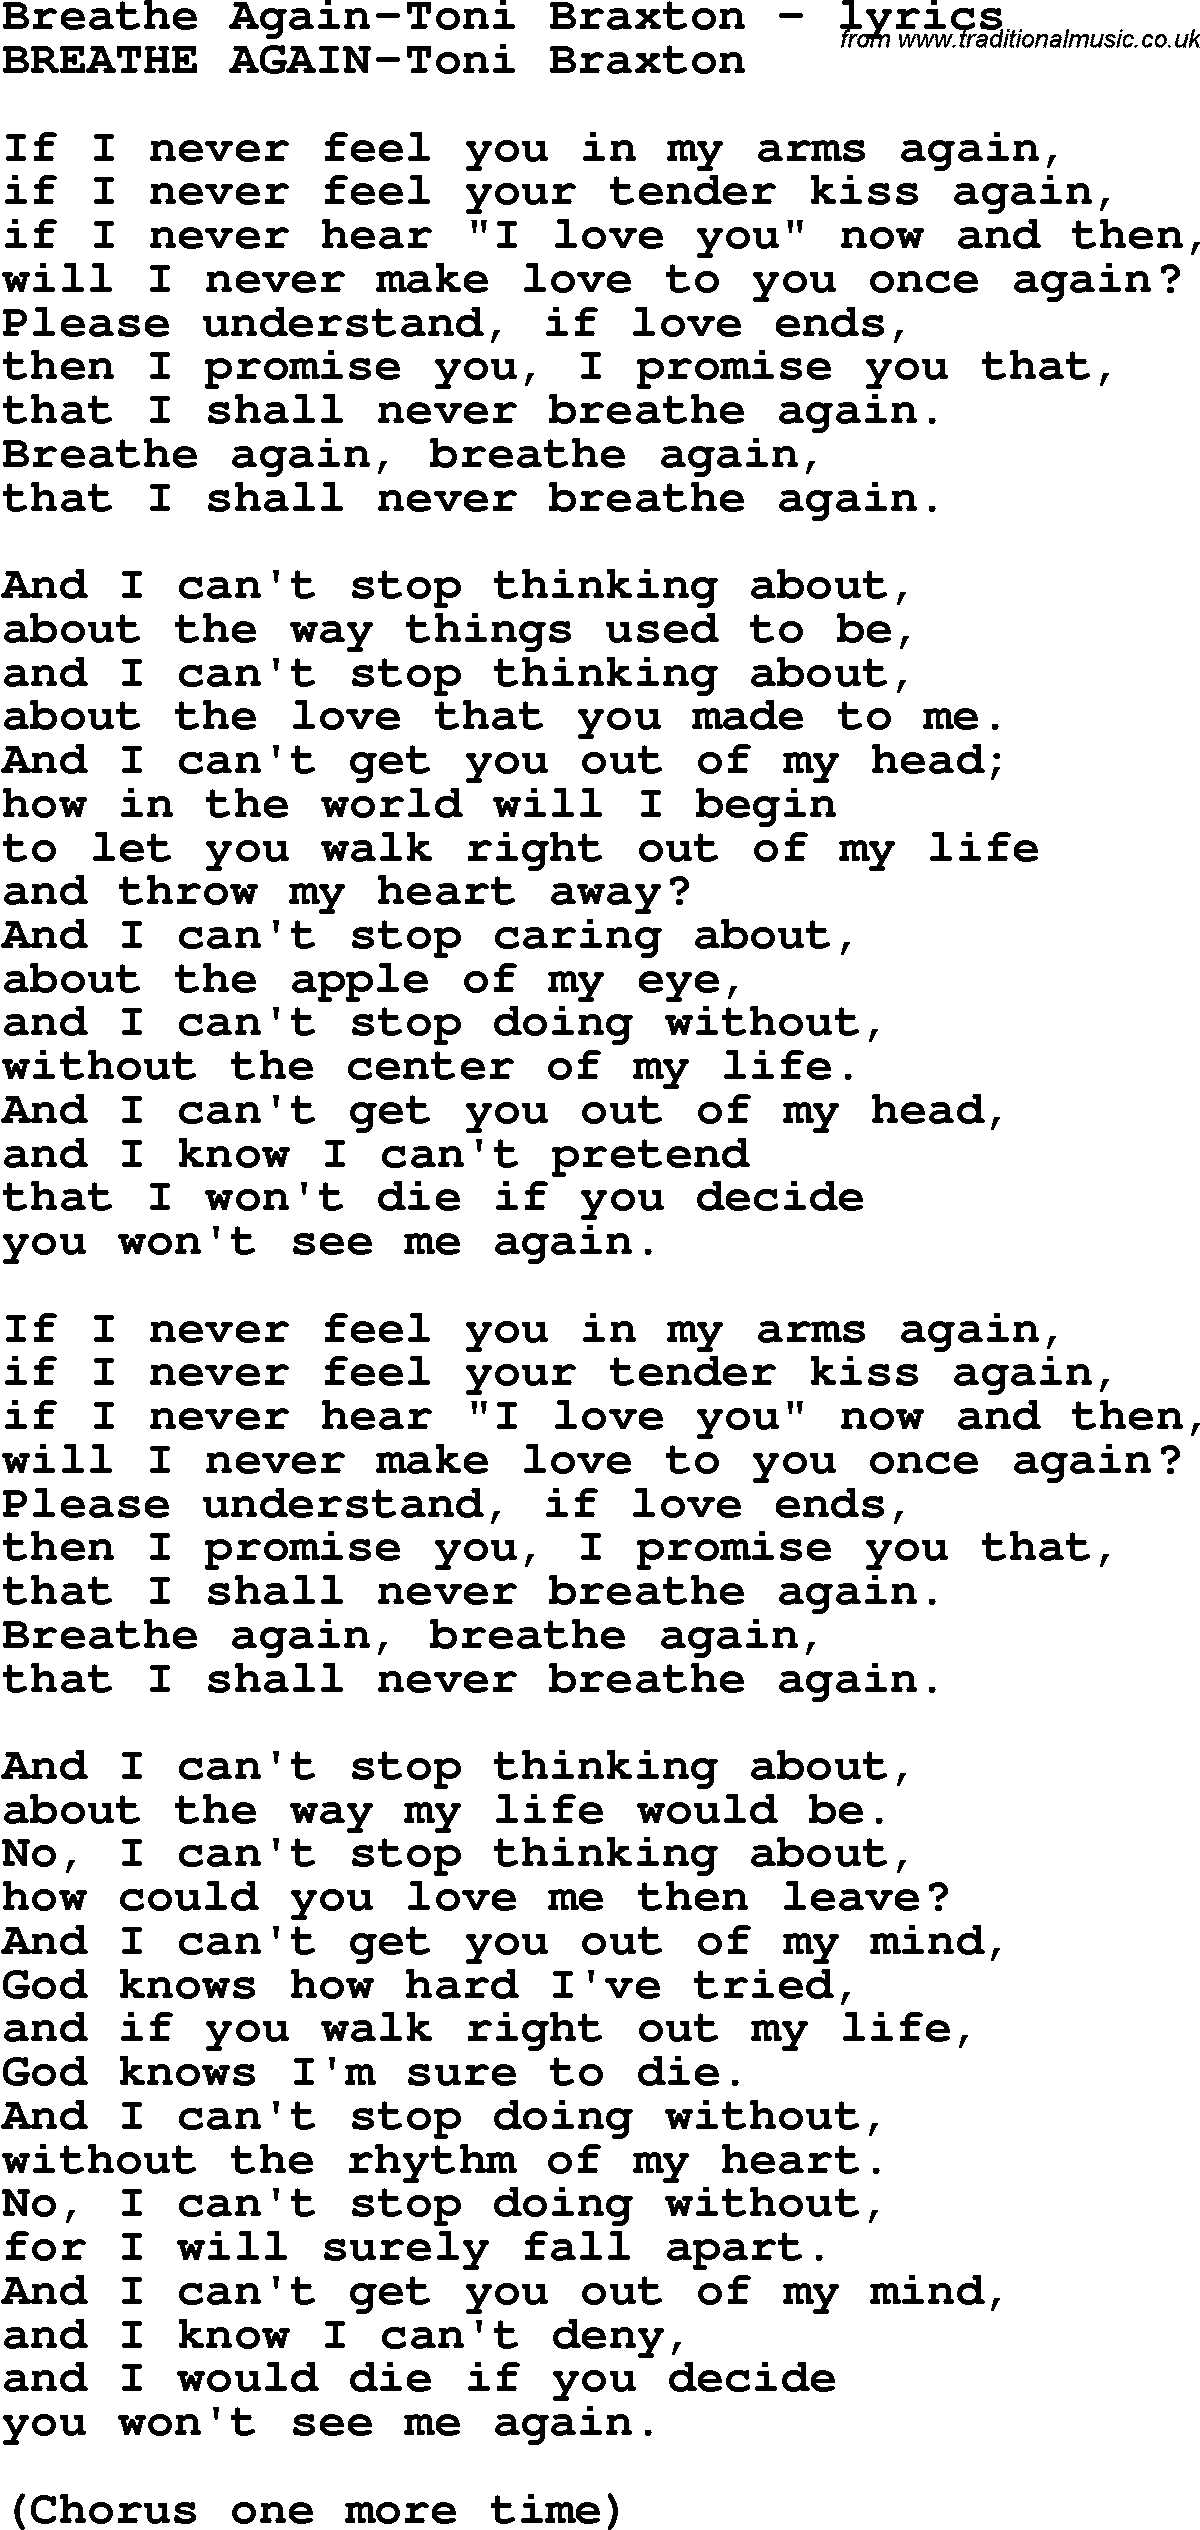 Love Song Lyrics for: Breathe Again-Toni Braxton